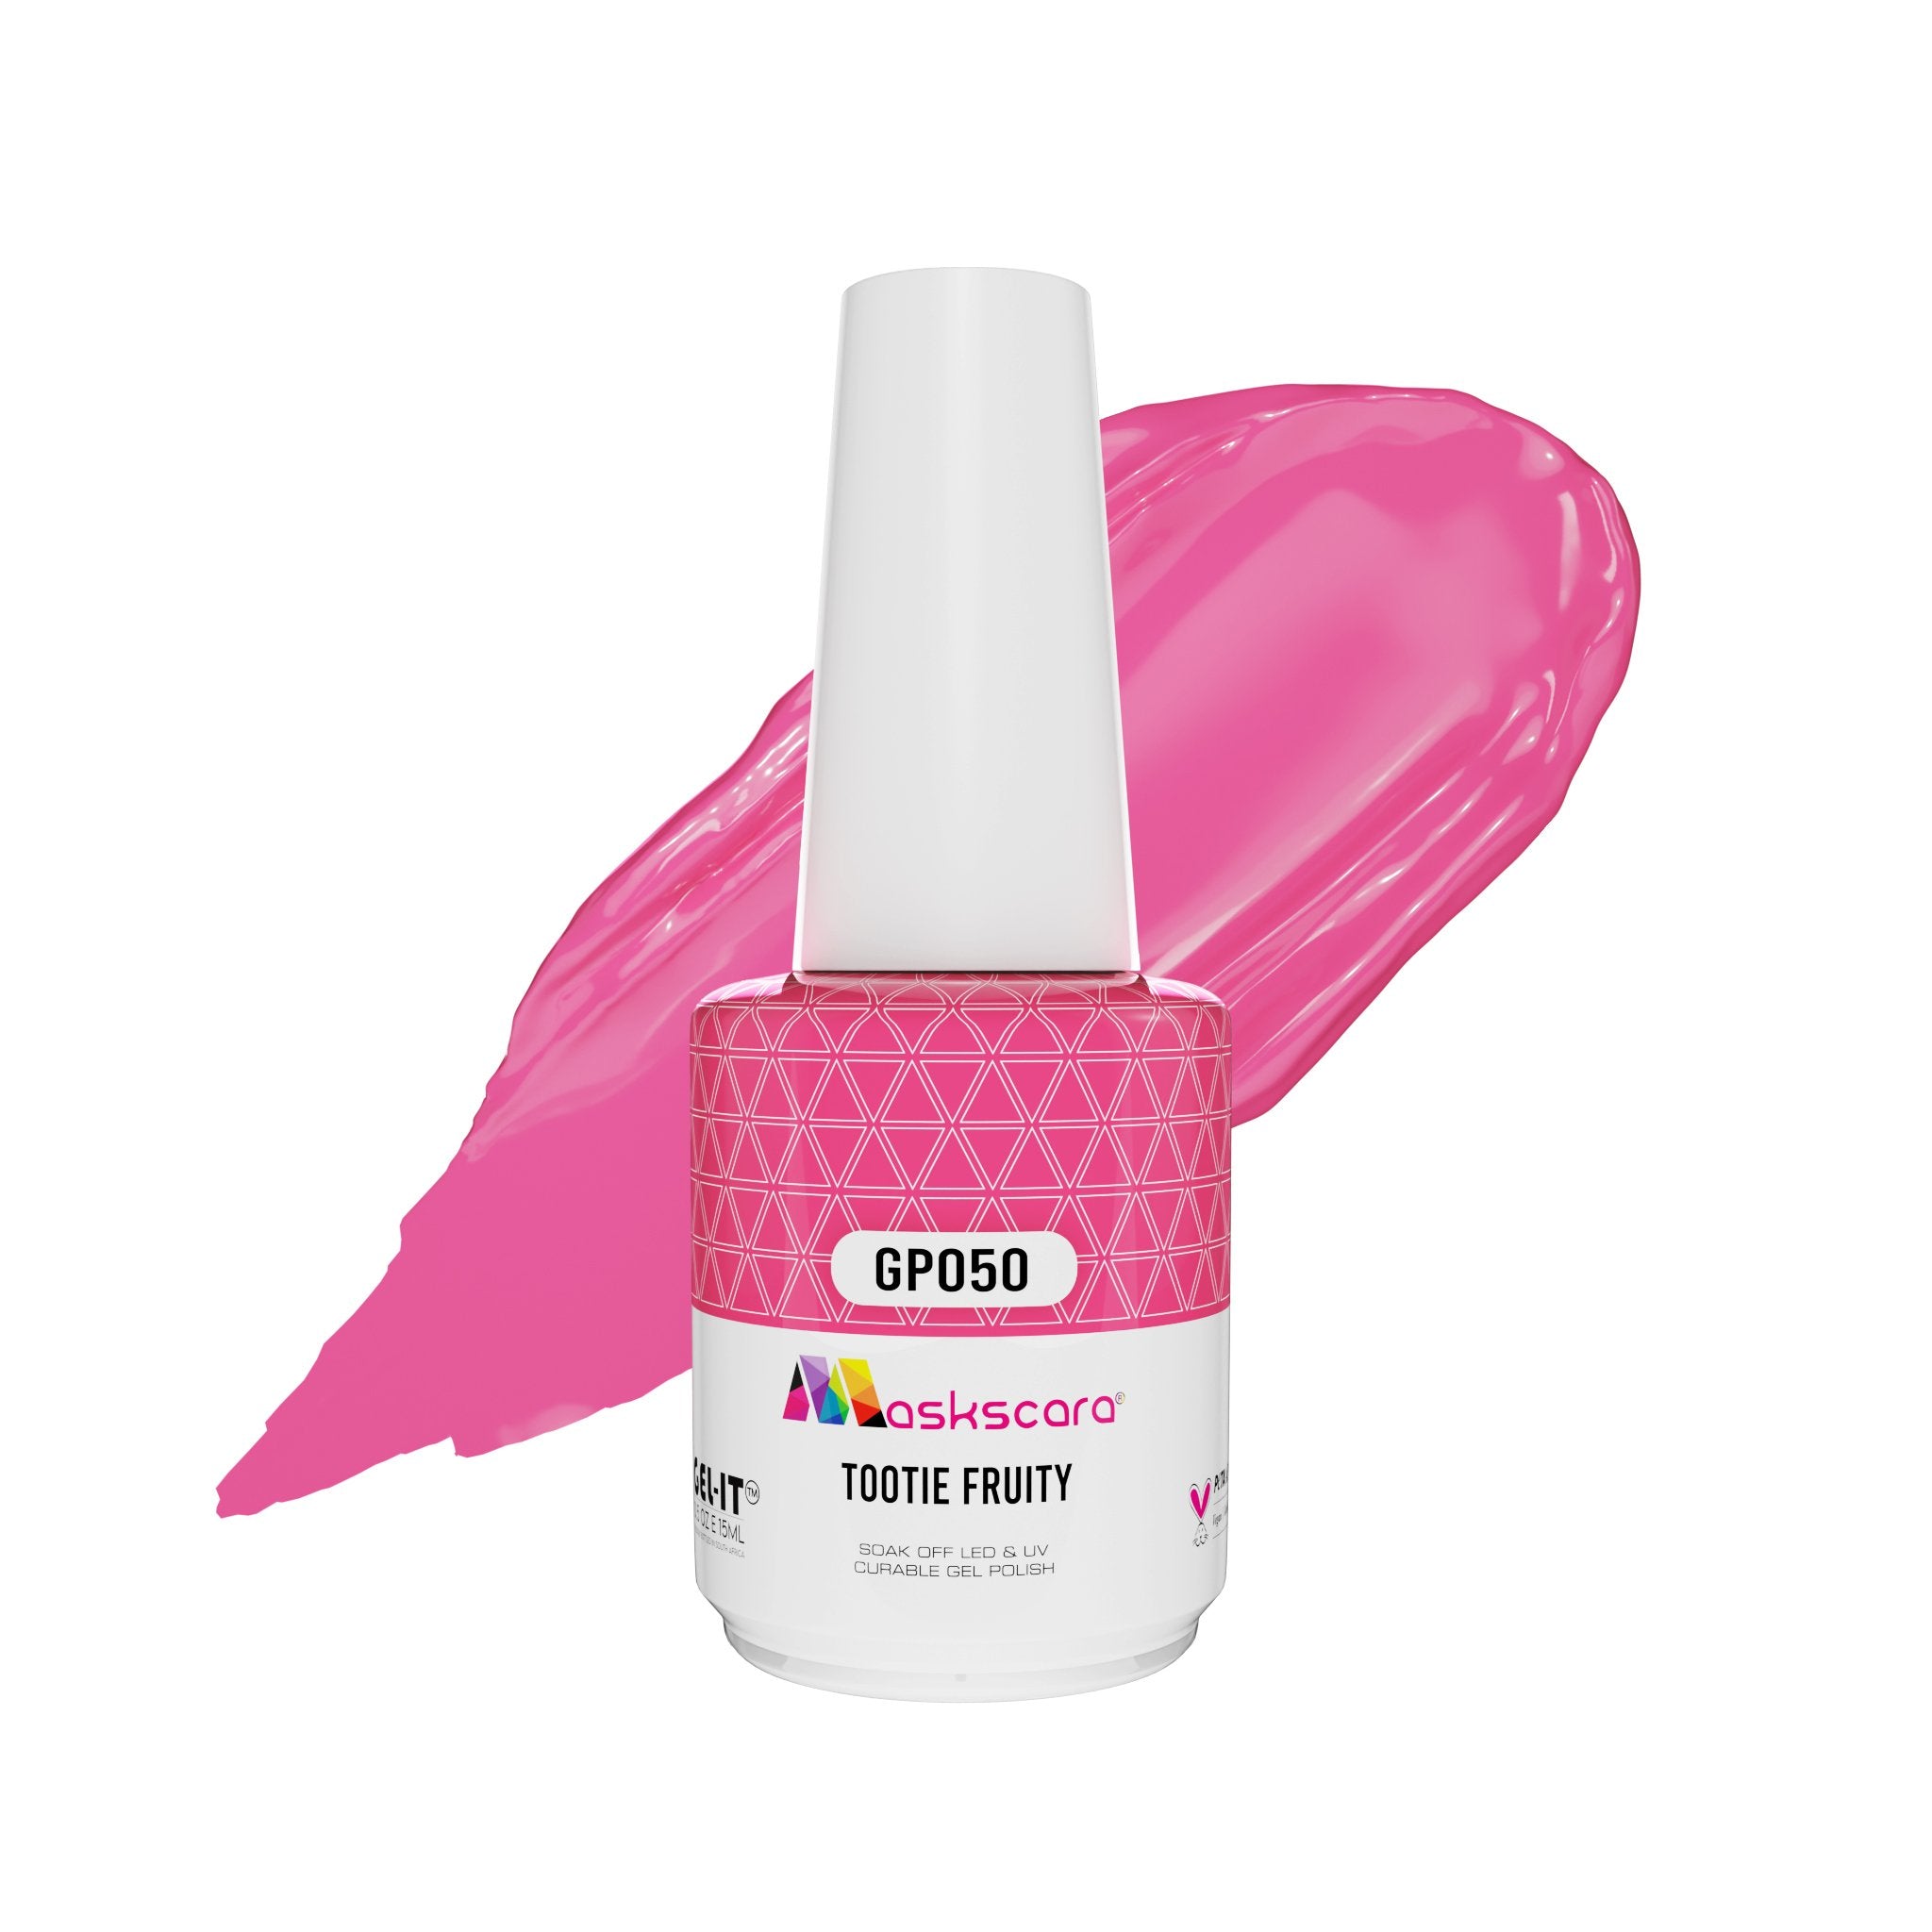 <img scr = “ GP050 Tootie Fruity.jpeg” alt = “Barbie Pink gel polish colour by the brand Maskscara”>